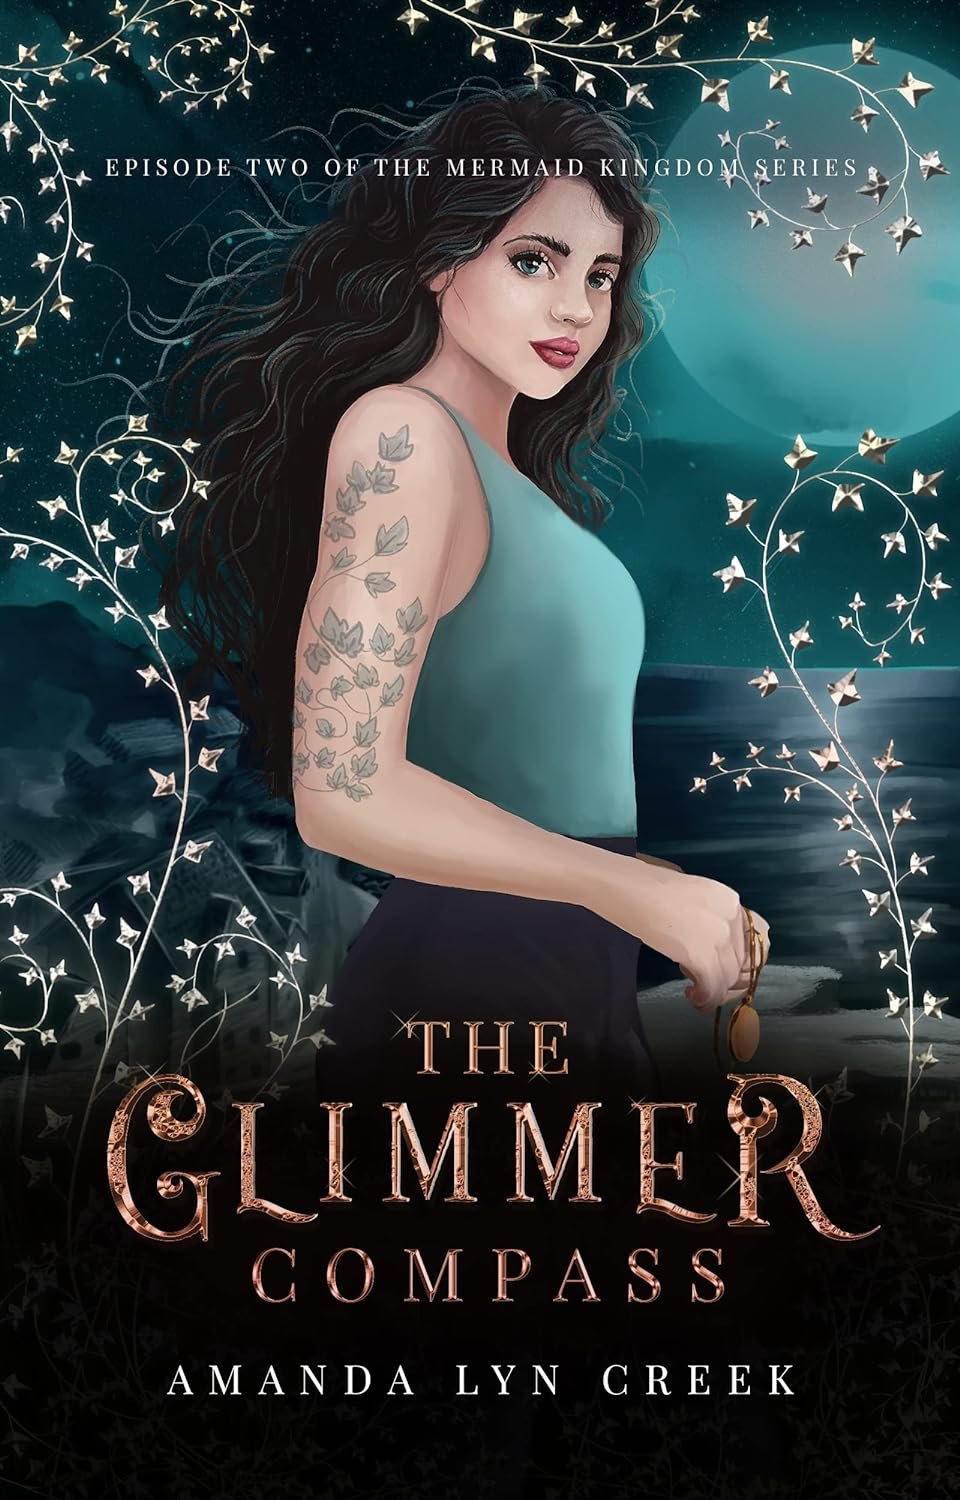 The Glimmer Compass (Book 2 of The Mermaid Kingdom series) by Amanda Lyn Creek (Copy)